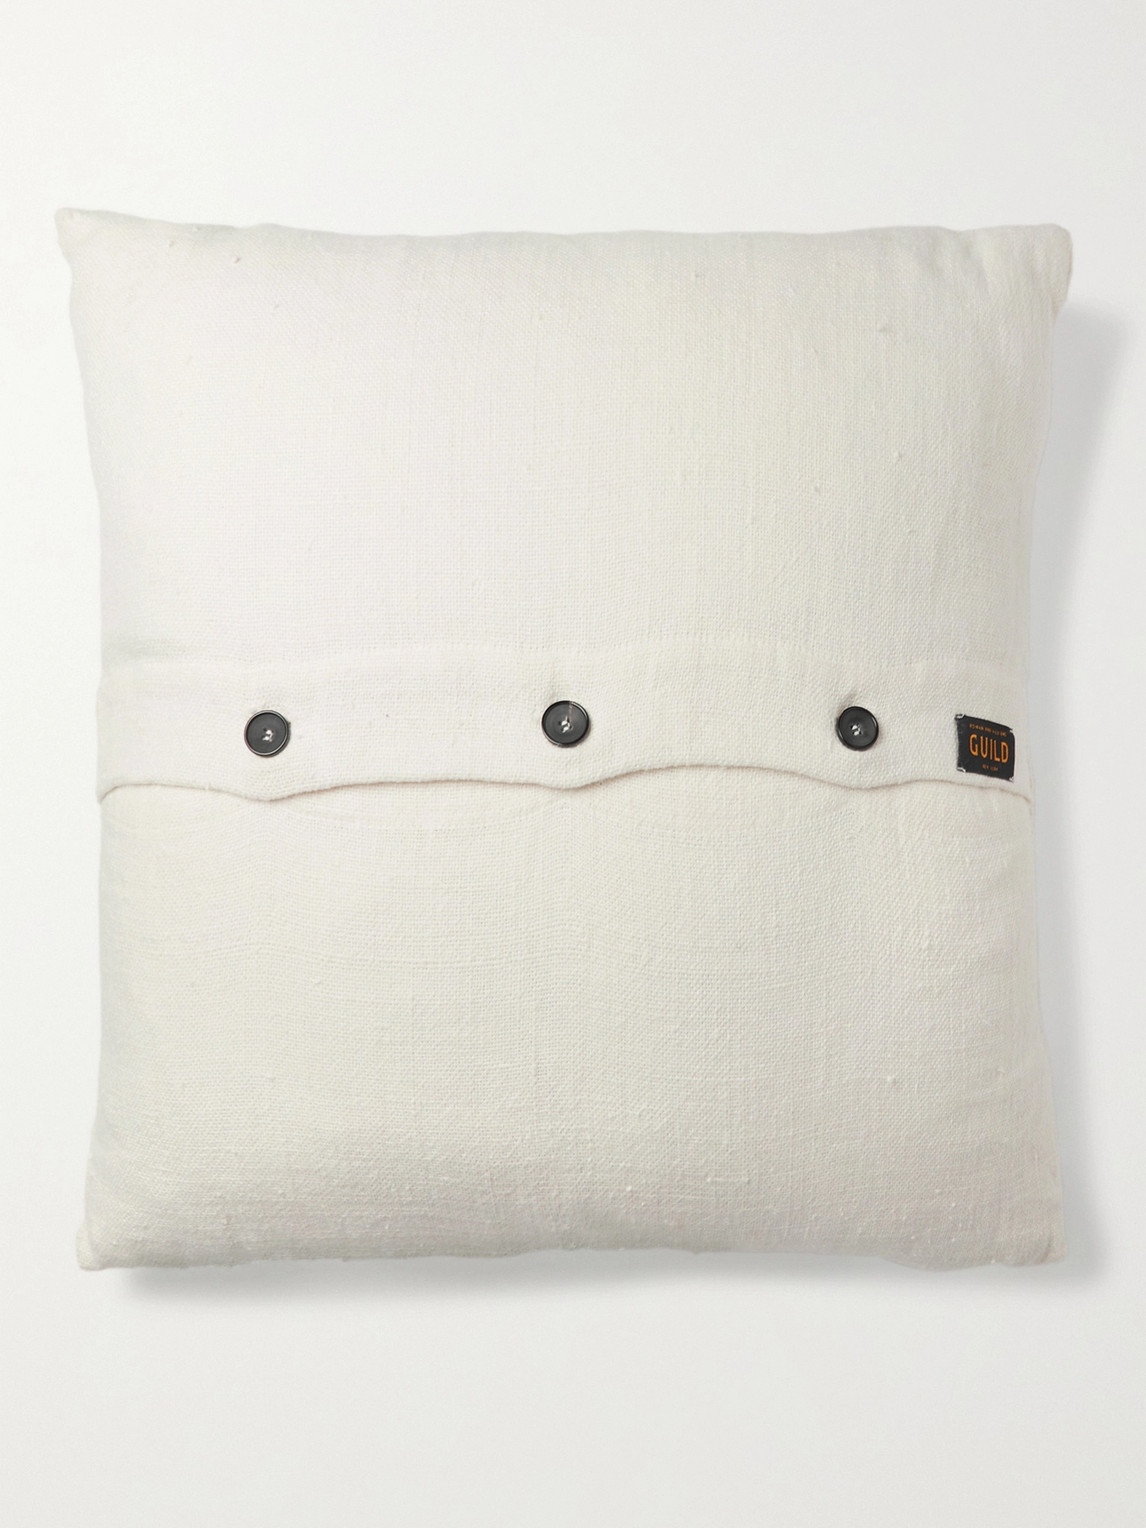 Roman & Williams Guild Buttoned Linen Cushion Cover In White